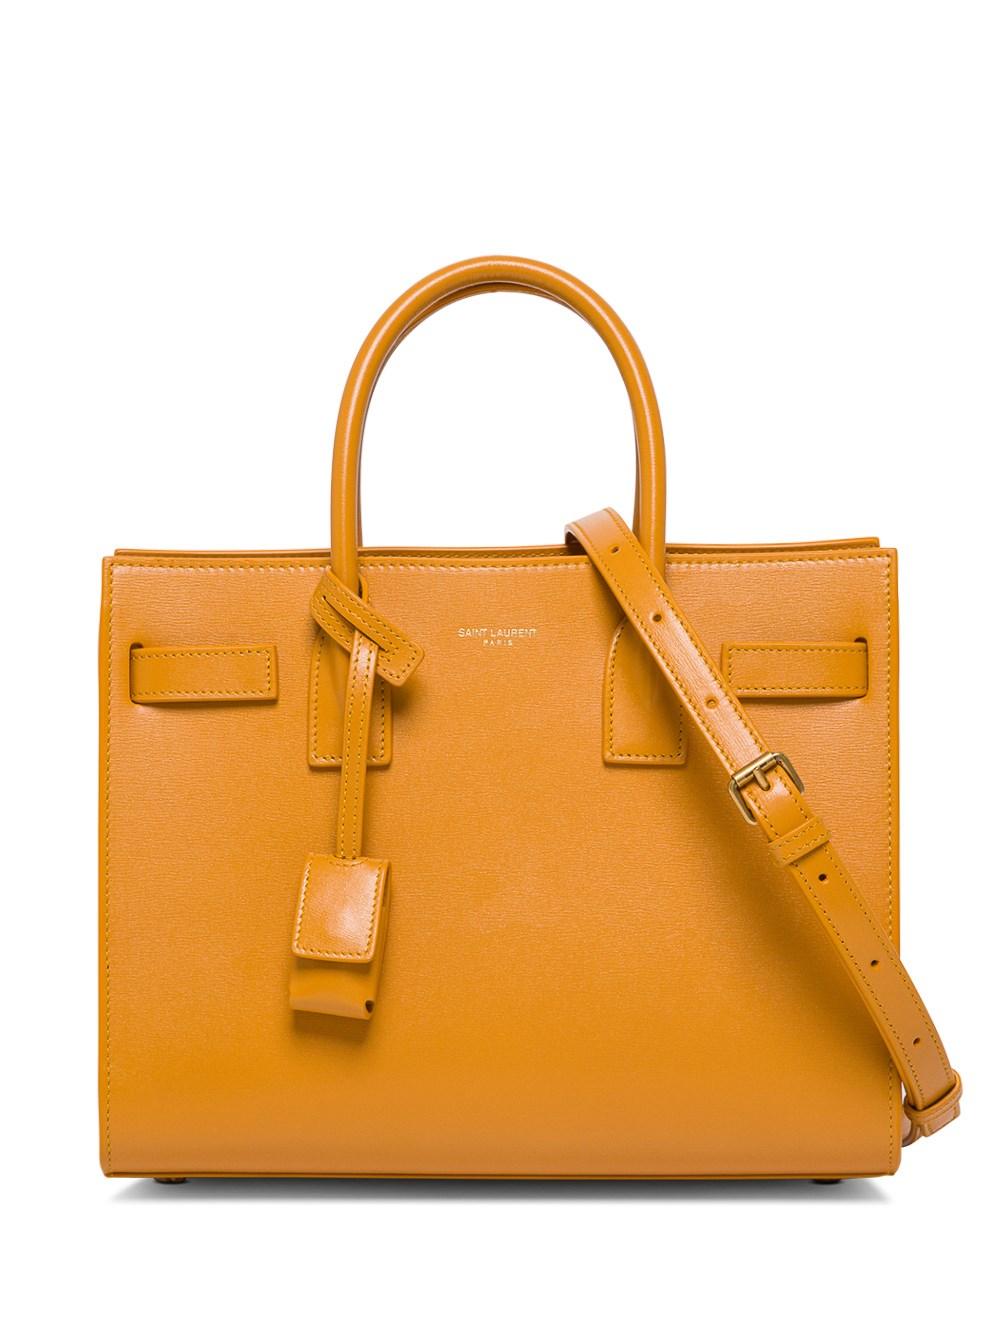 Saint Laurent Sac De Jour Handbag In Mustard-colored Leather in Yellow |  Lyst